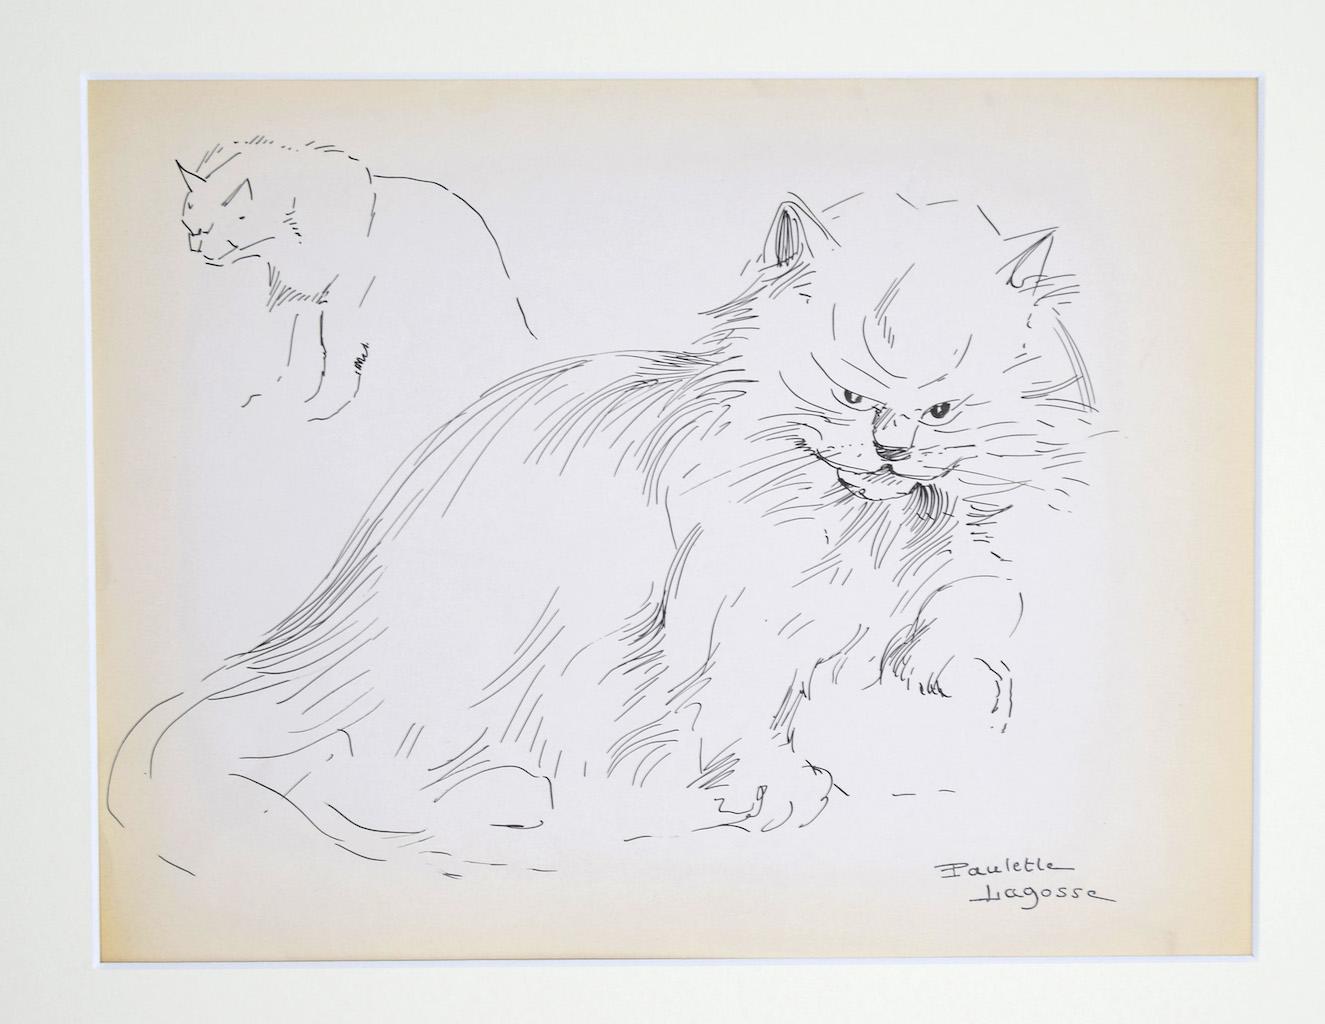 The Cat - Original Stift auf Papier von M. P. Lagosse - 1970er Jahre